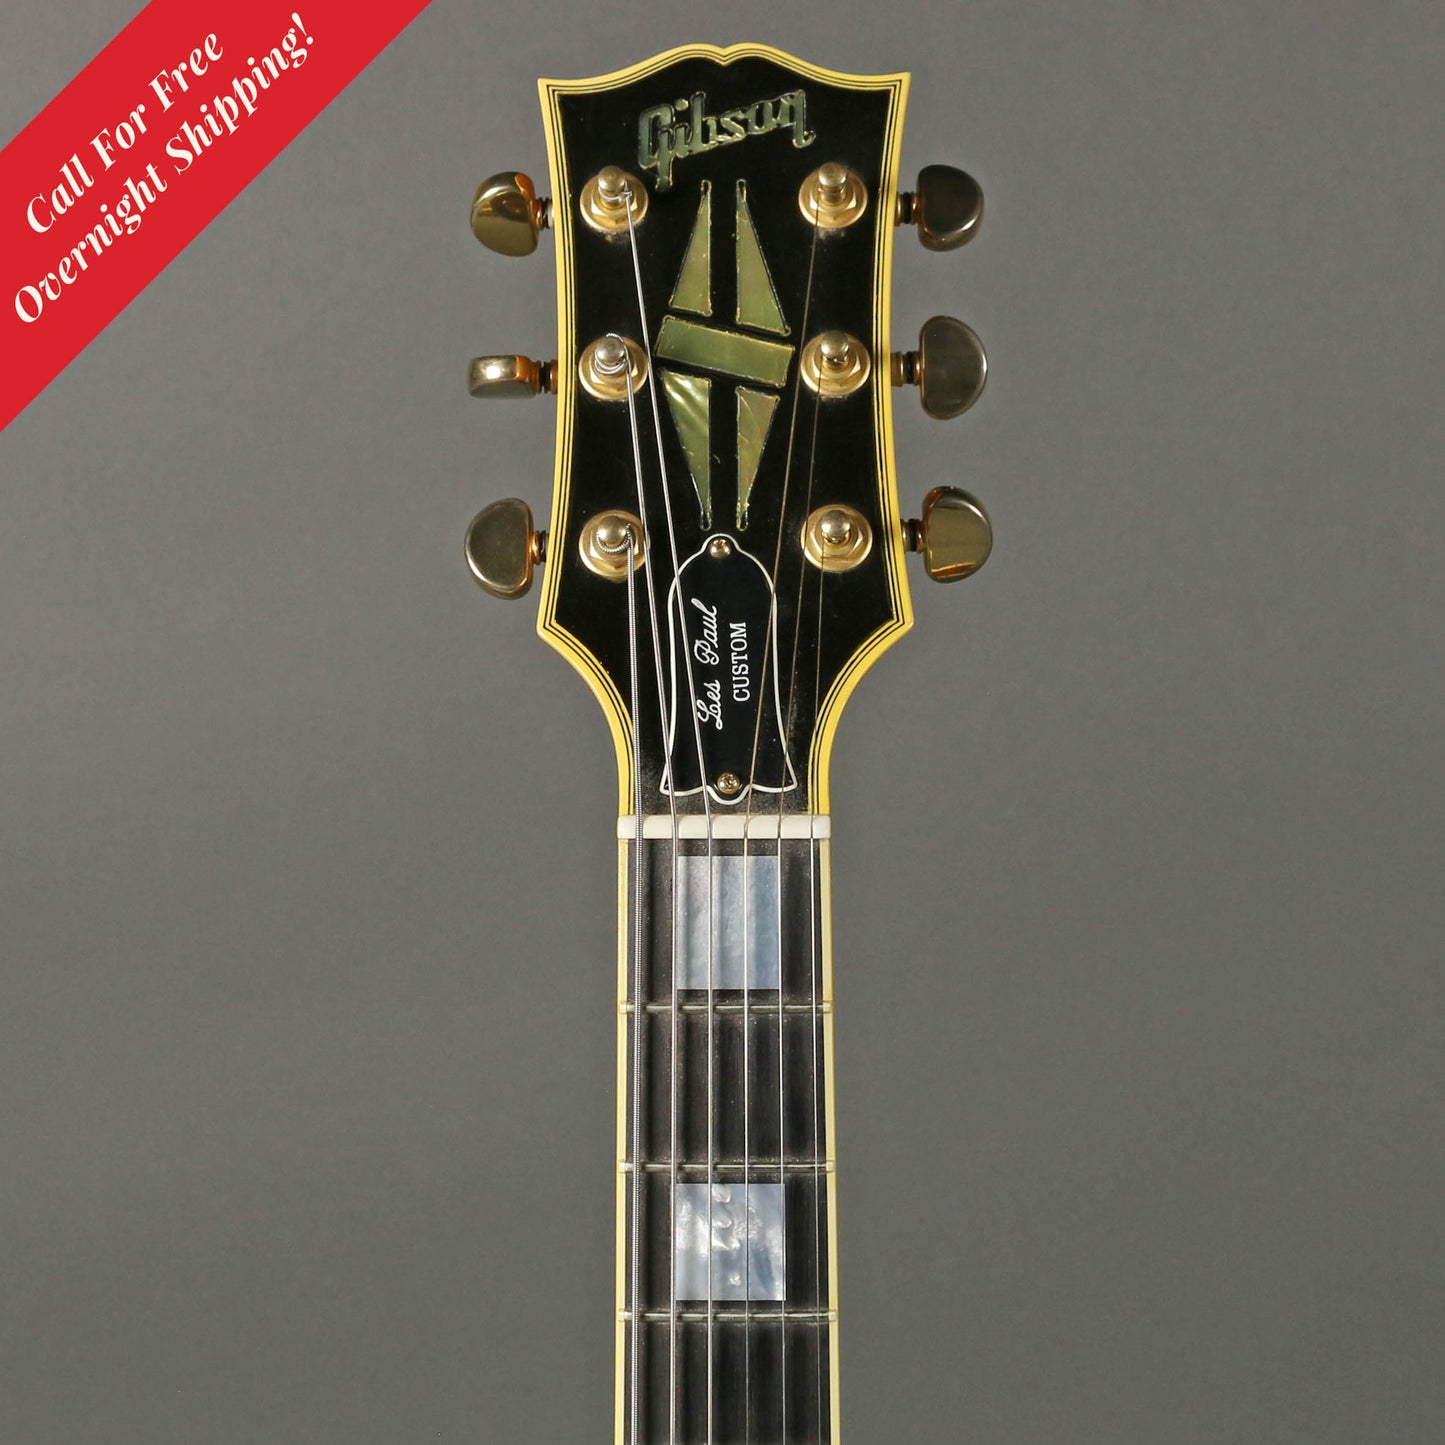 1997 Gibson Custom Shop Les Paul Custom ’68 Reissue “Blonde Beauty”